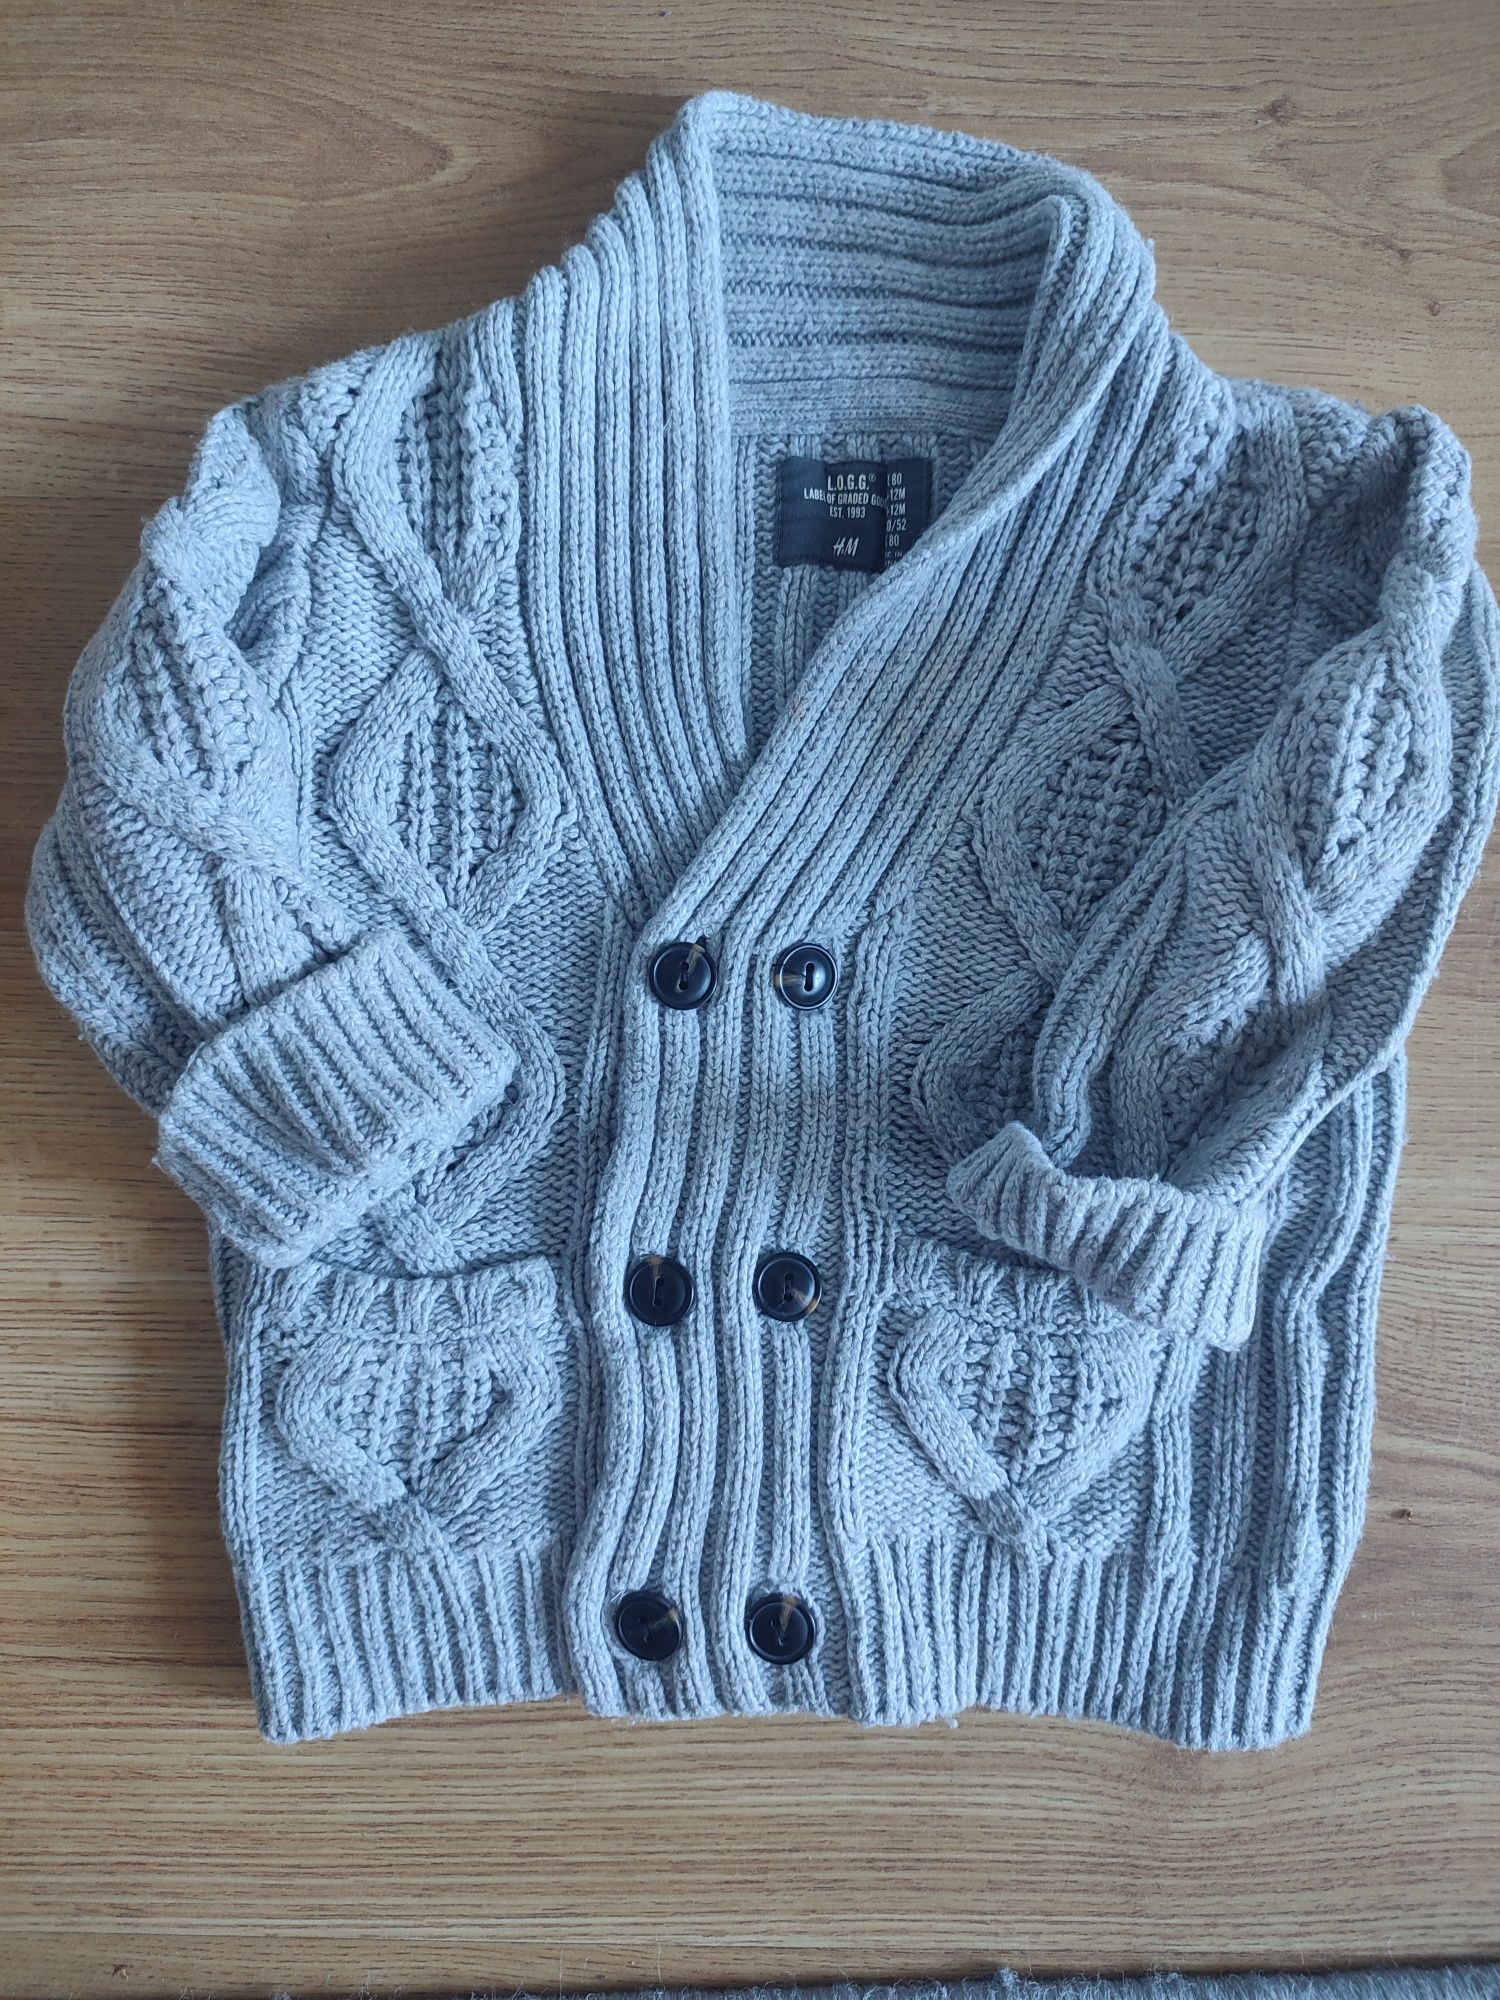 Gruby sweter 9-12 mc